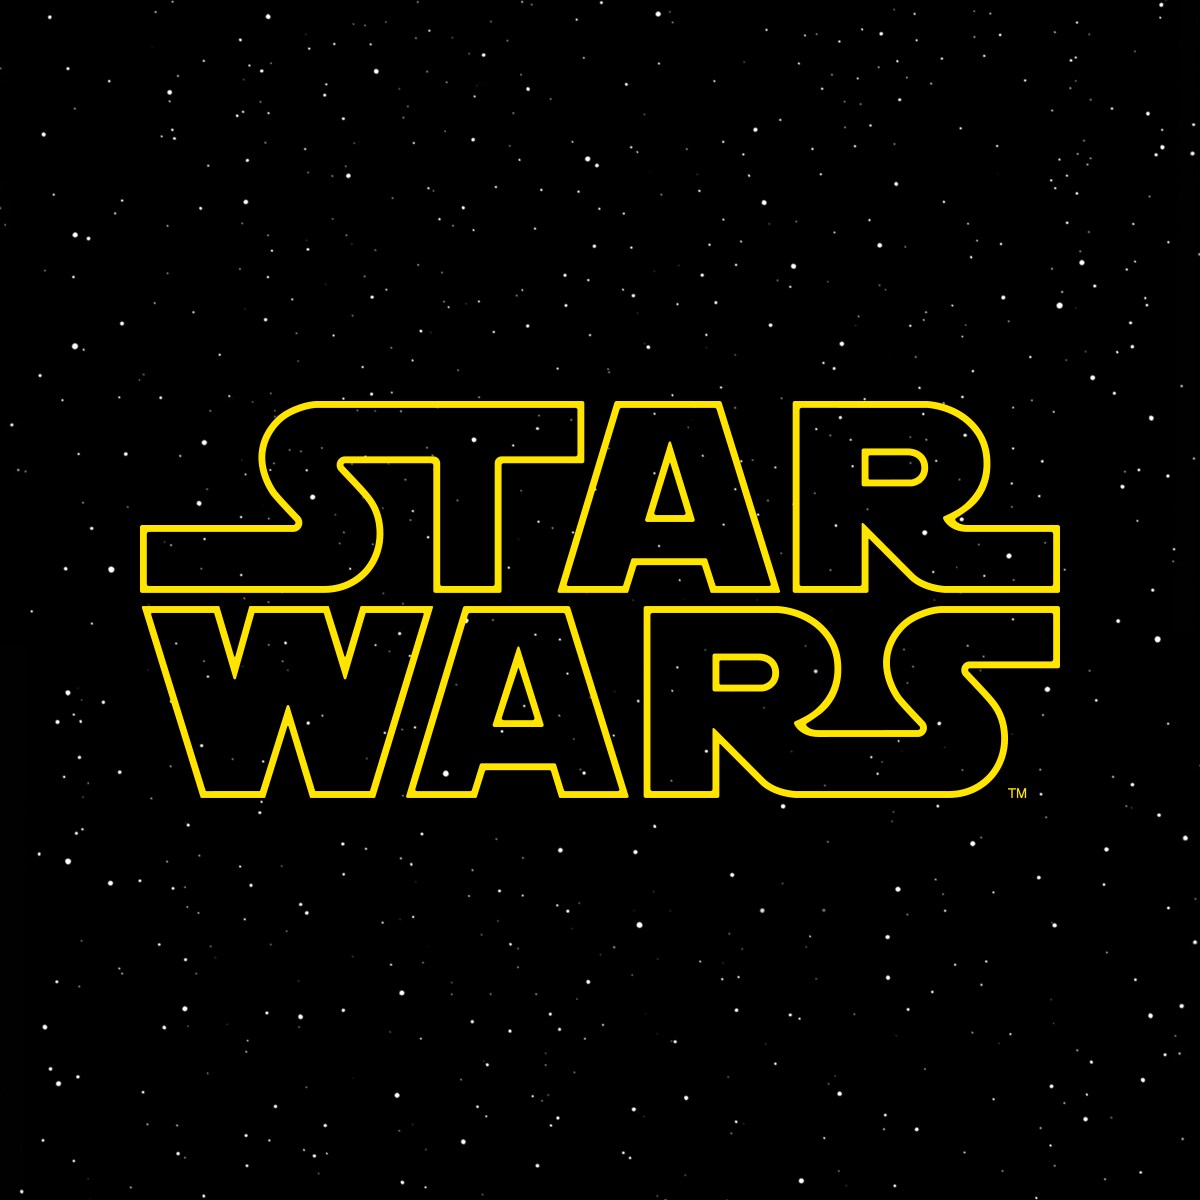 star wars the force awakens full movie stream free